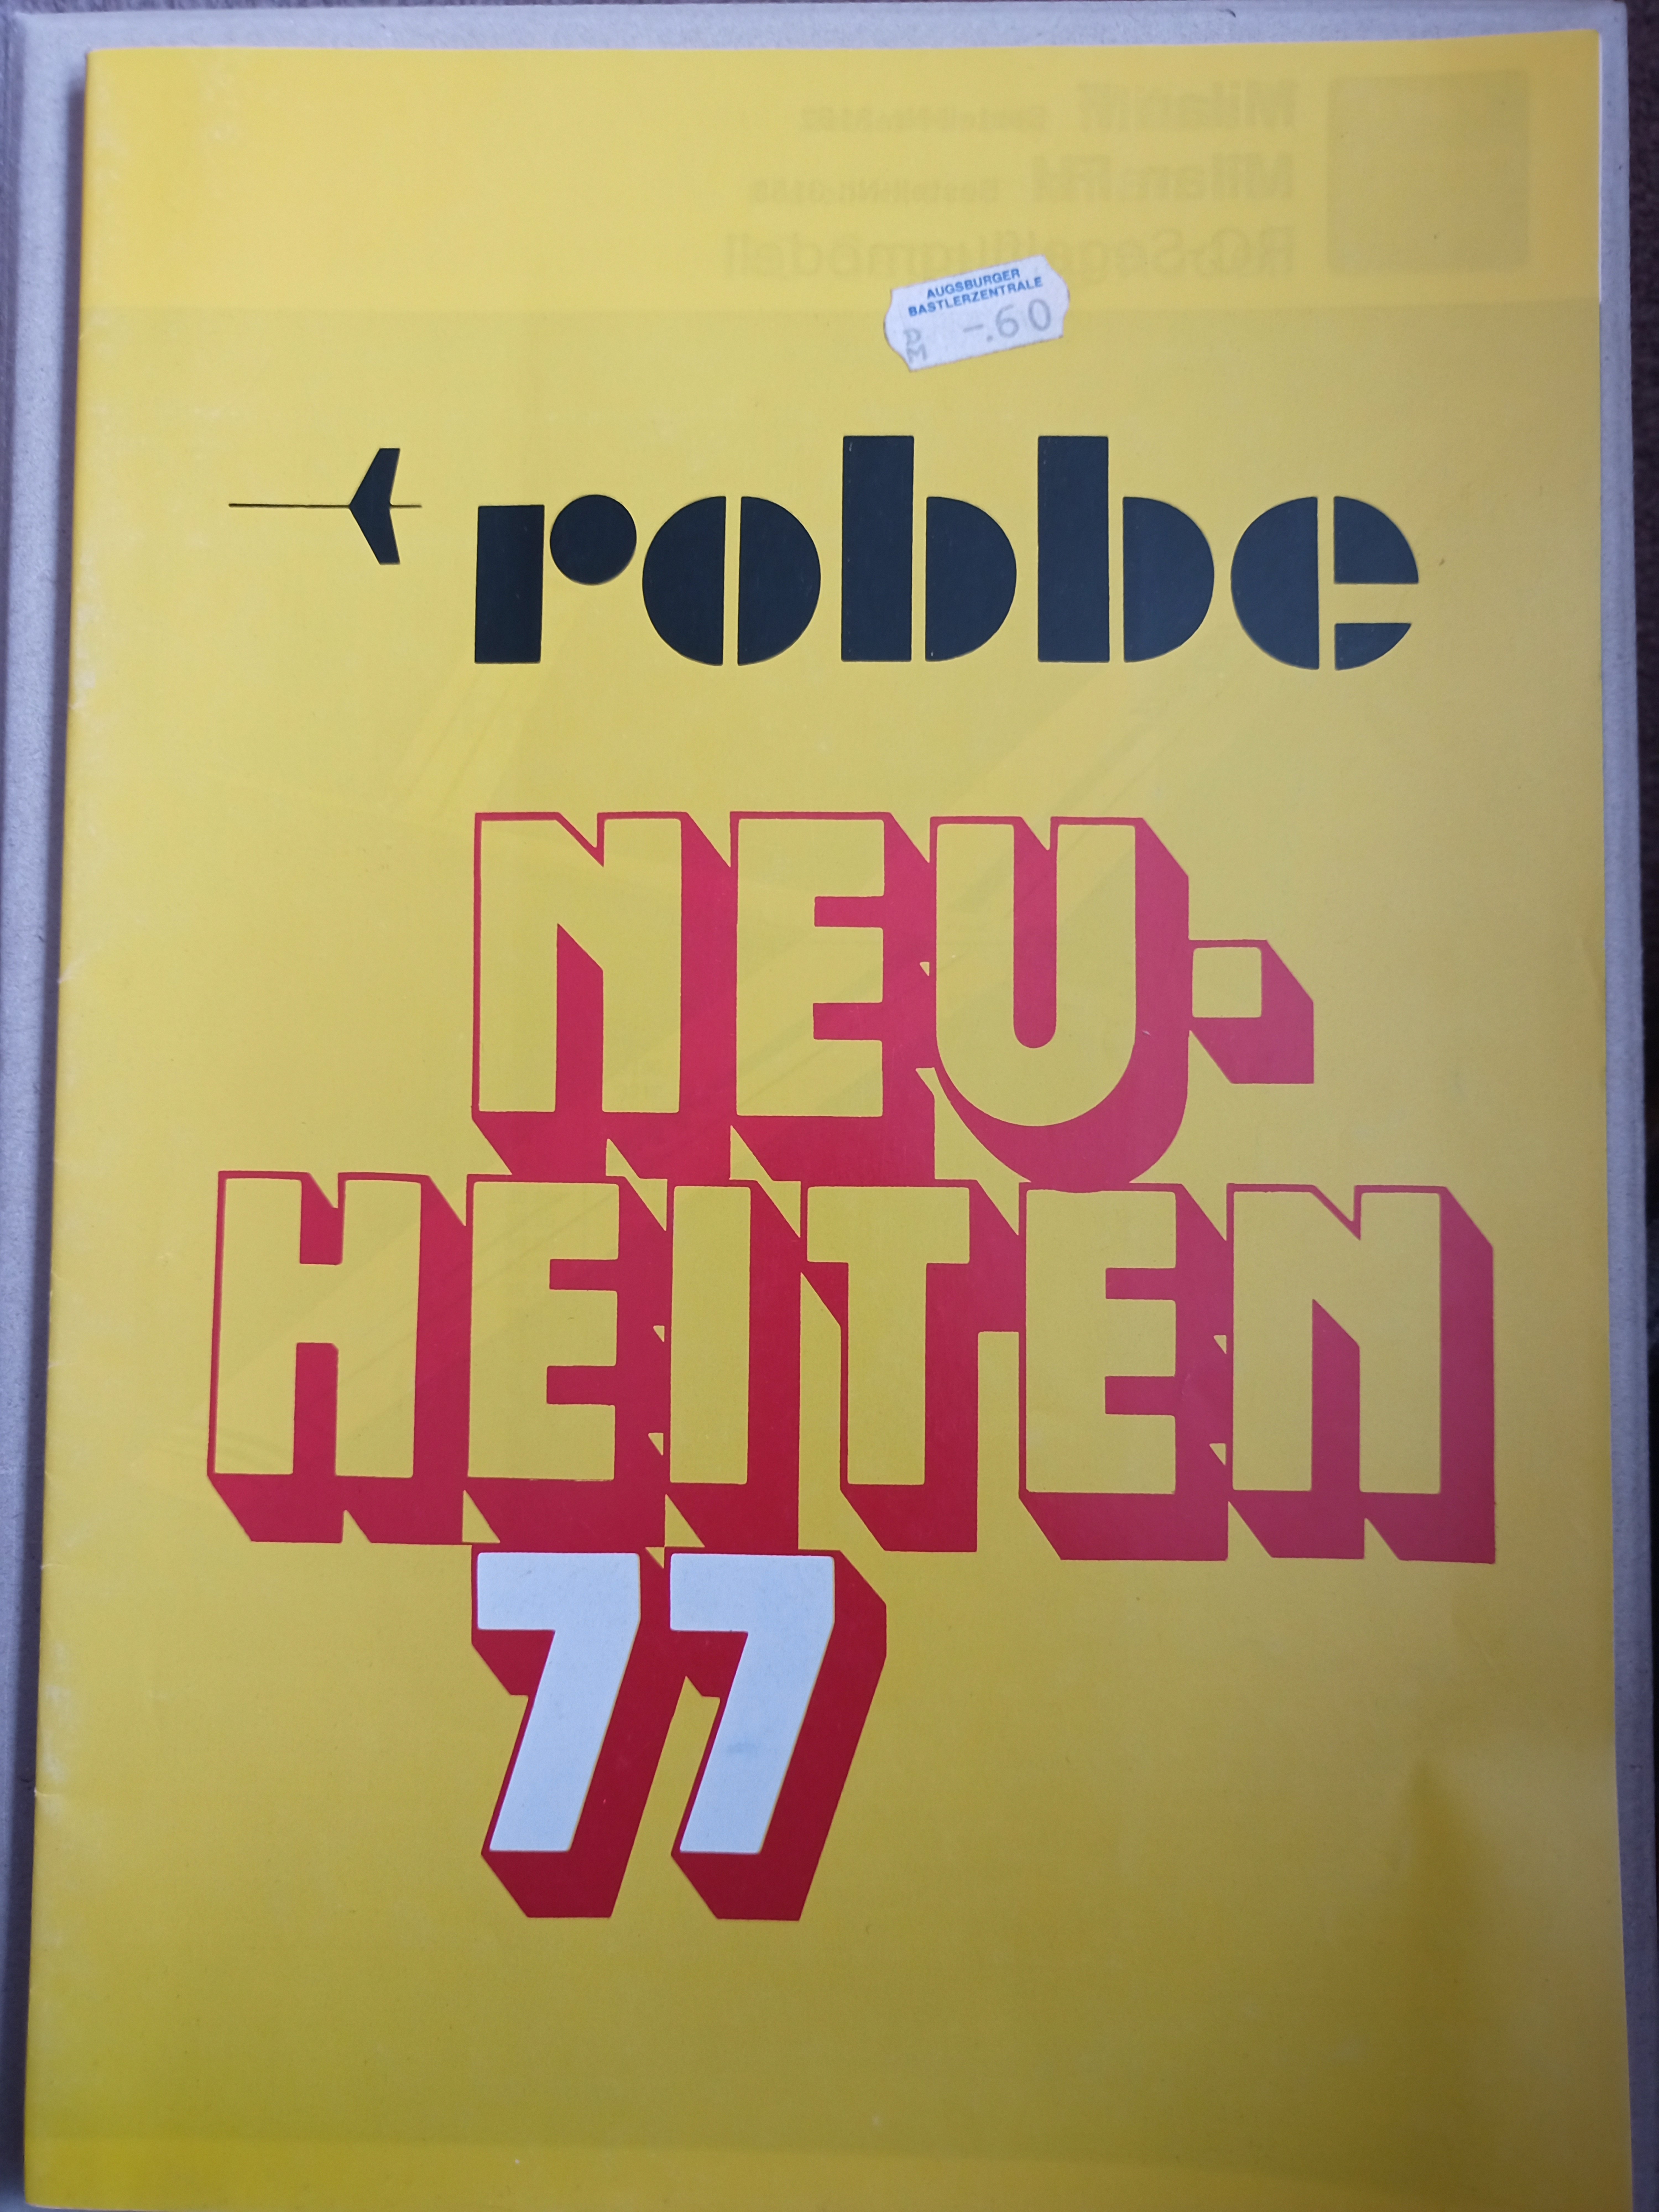 robbe Neuheiten 1977 (Deutsches Segelflugmuseum mit Modellflug CC BY-NC-SA)